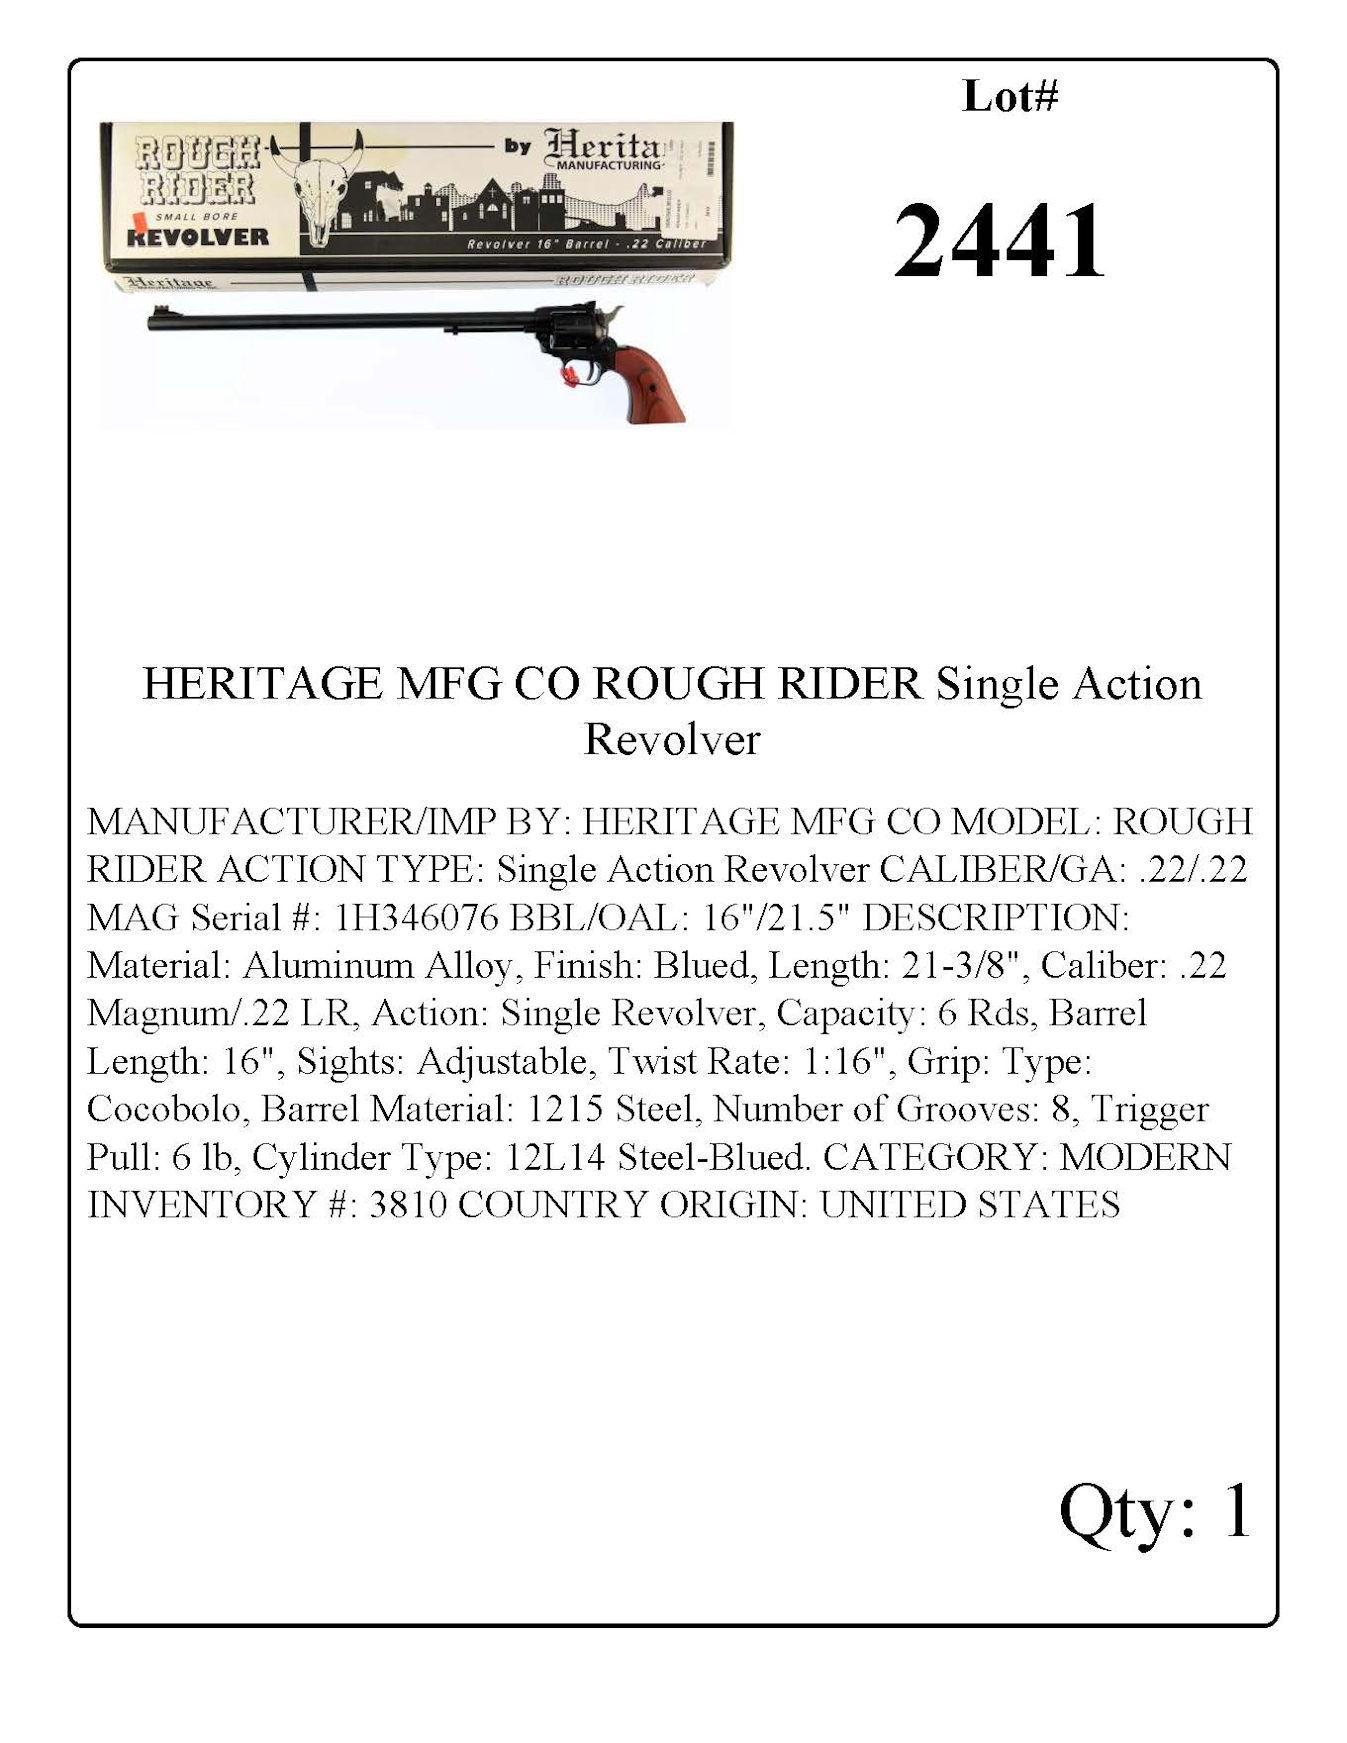 HERITAGE MFG CO ROUGH RIDER Single Action Revolver